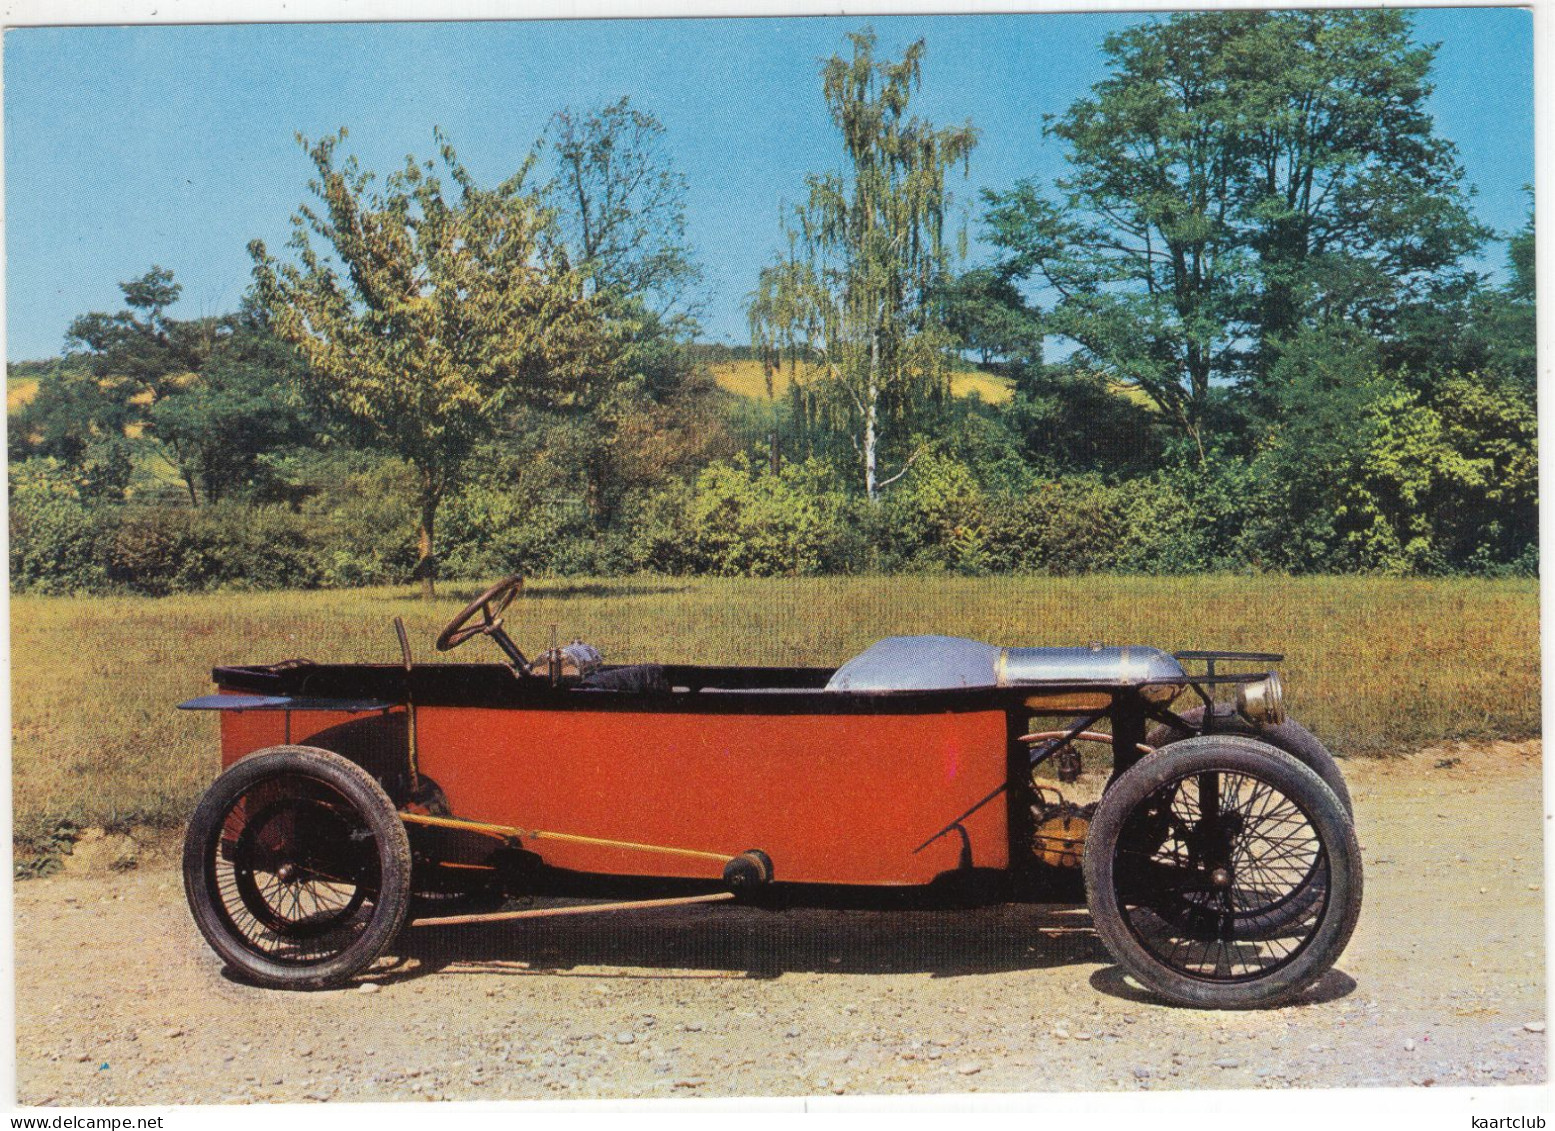 BEDELIA - Vitesse 100km/heure Au Mans En 1913 - Moteur 2 Cylindres En V - Chassis Bois -  (France) - Voitures De Tourisme